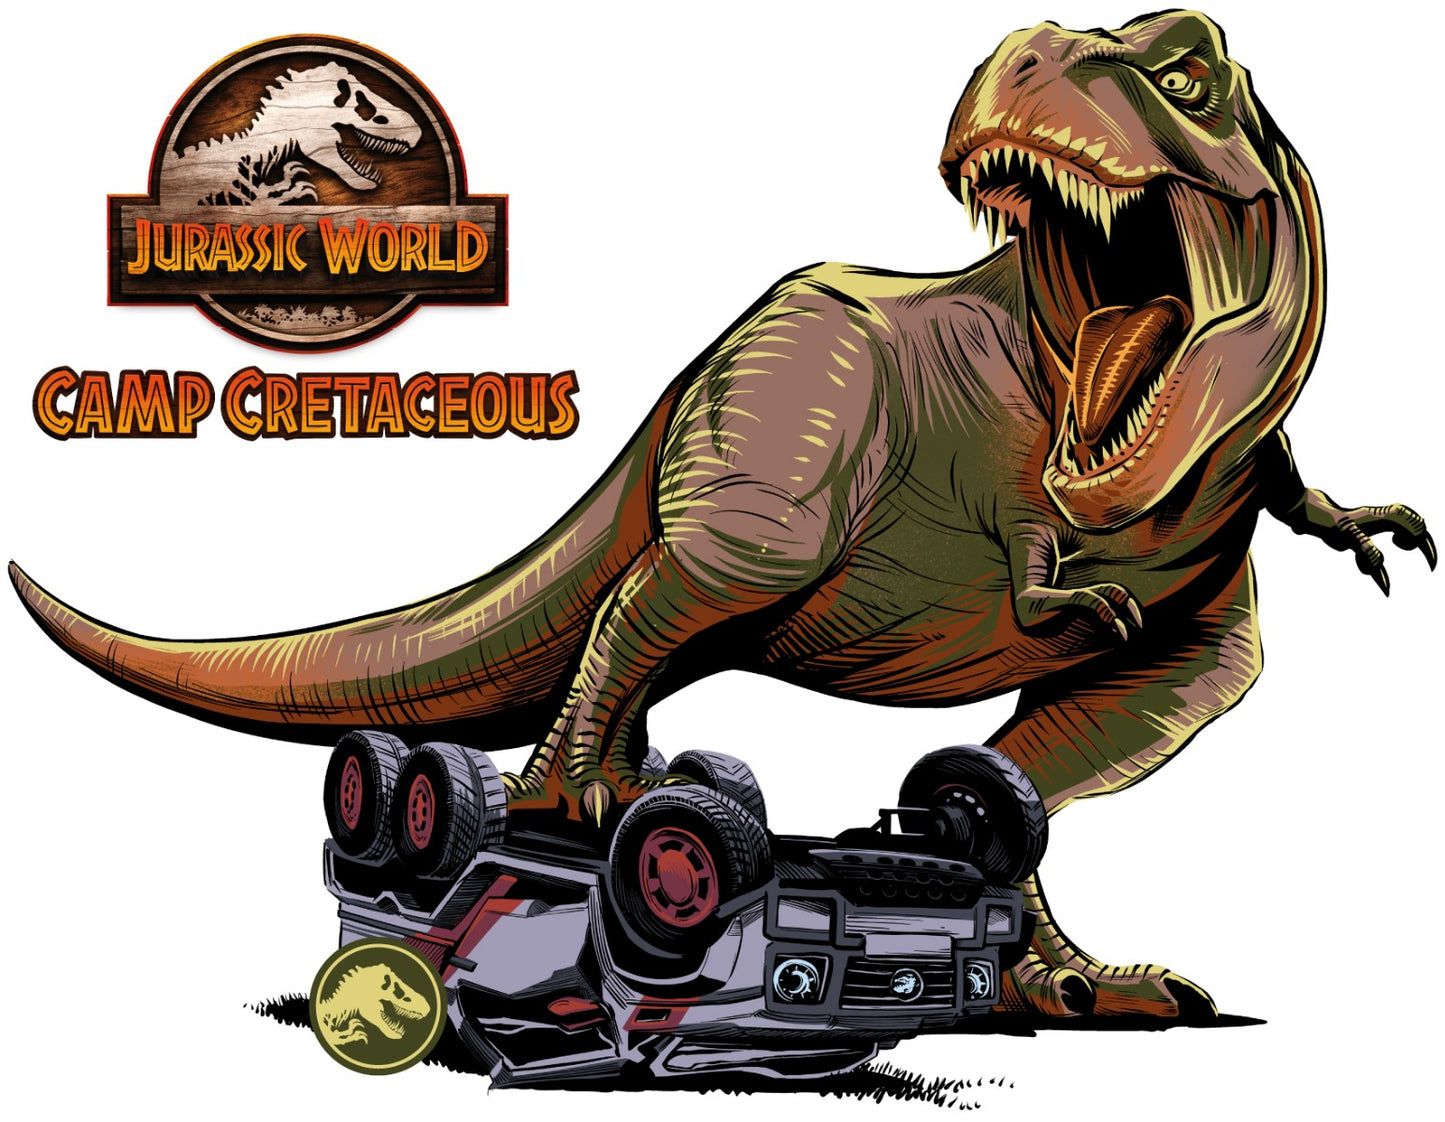 Jurassic World Camp Cretaceous Wall Sticker - T- Rex Crushing Car